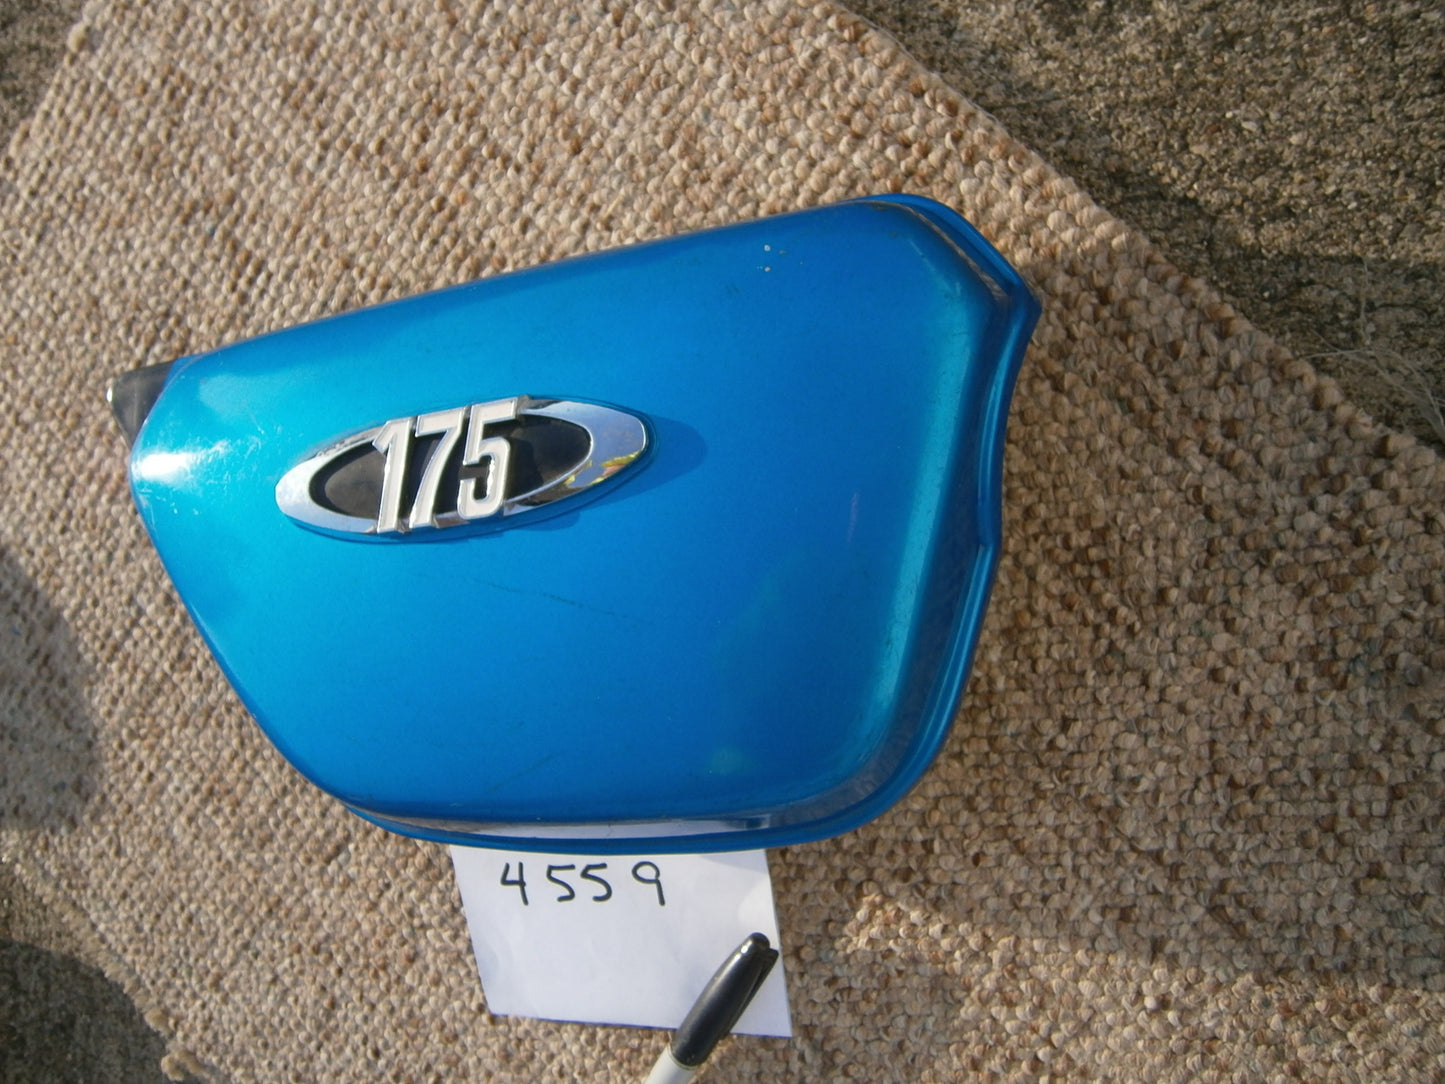 Honda CB175 blue  1971  right sidecover 4559